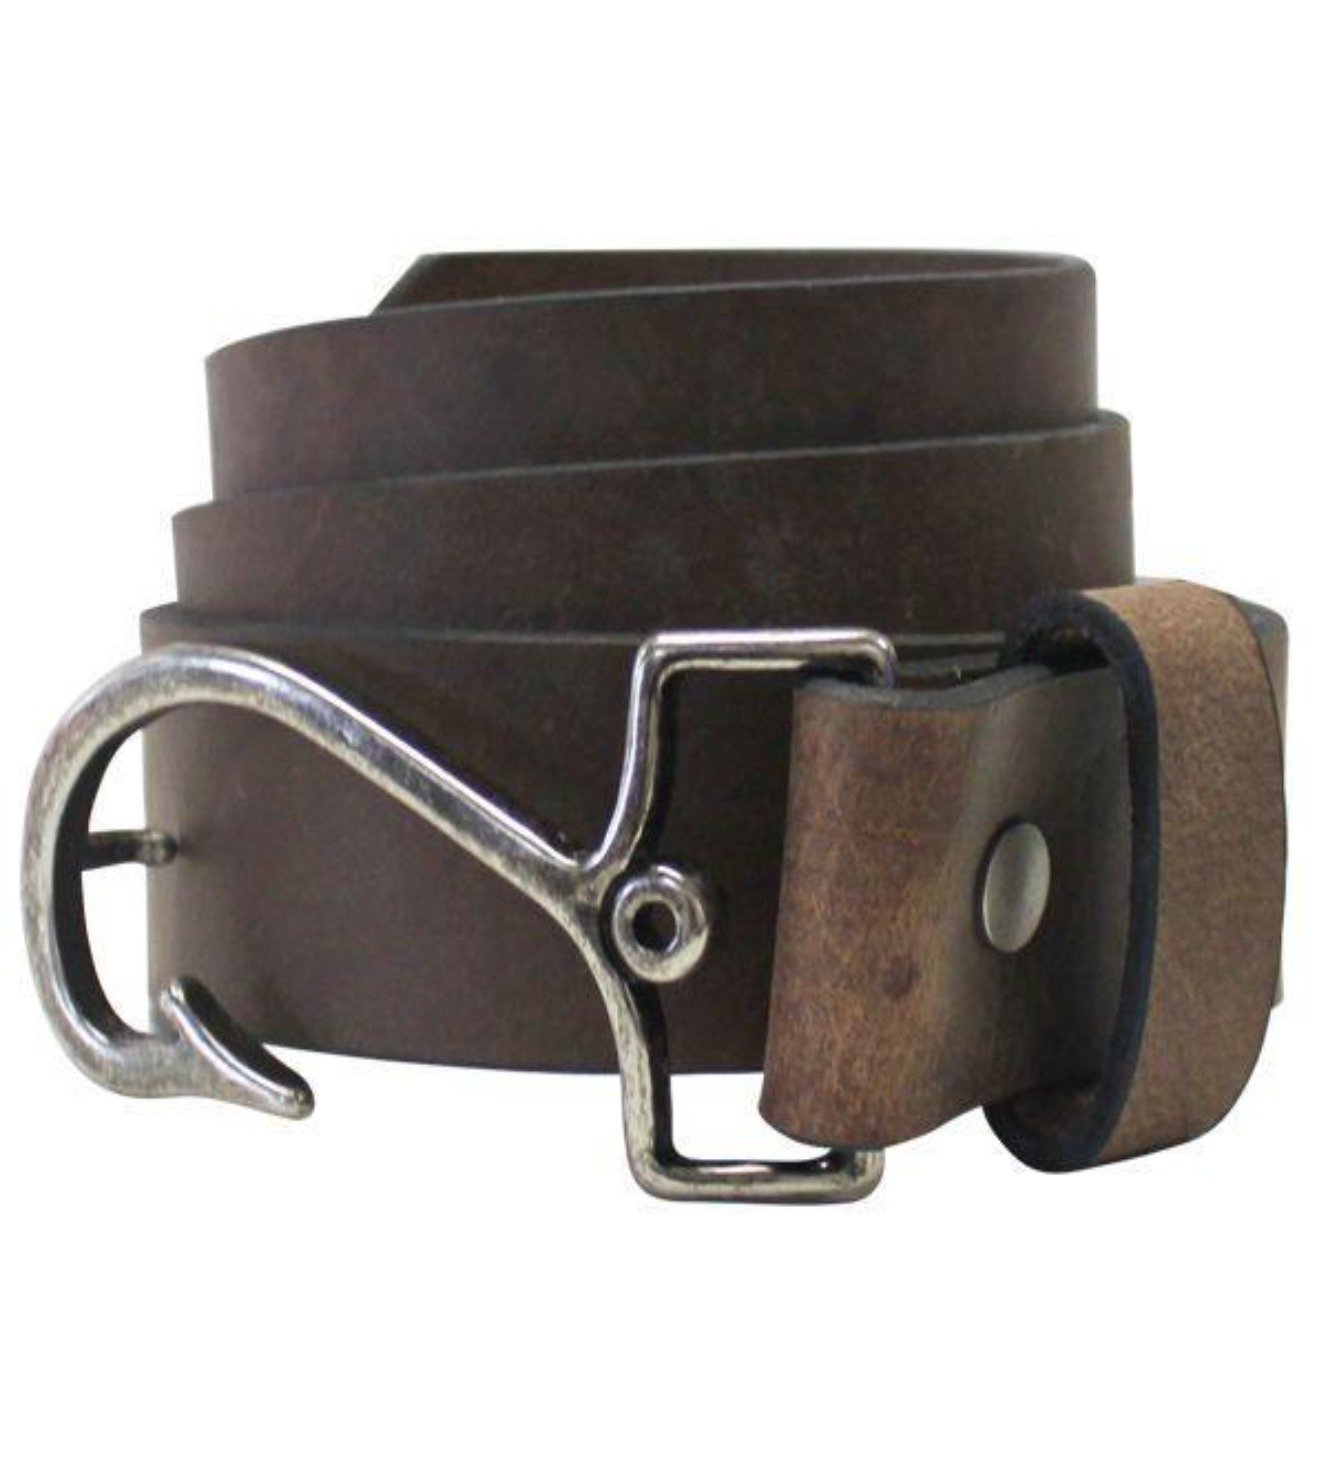 Cast Away Leather Belt by Bison Belts